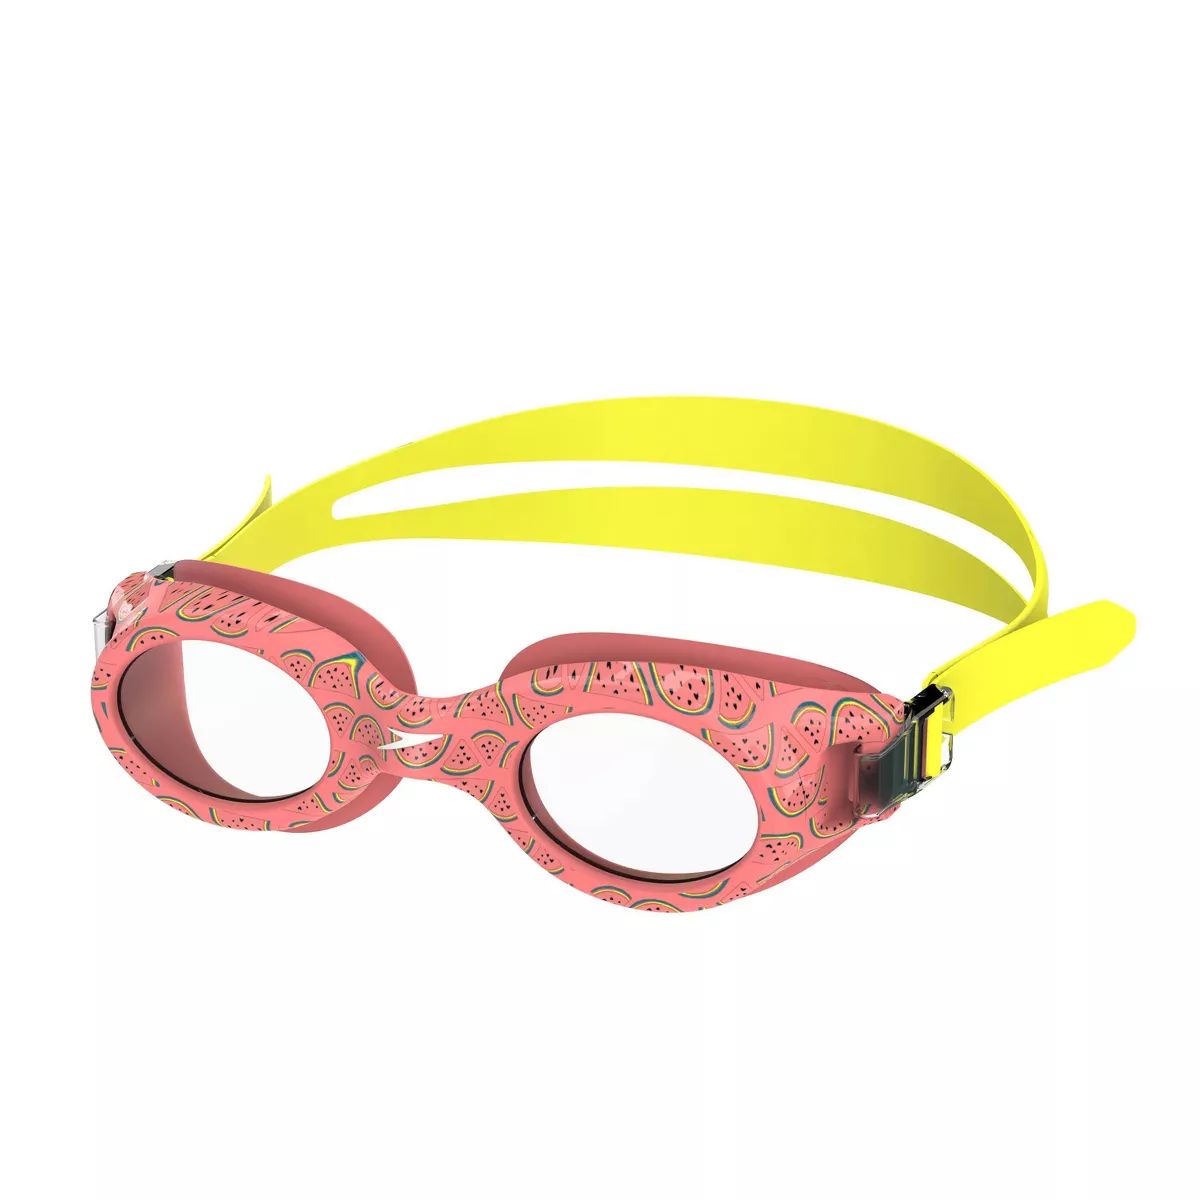 Speedo Jr Glide Print Swim Goggles - Yellow/Pink Watermelon | Target